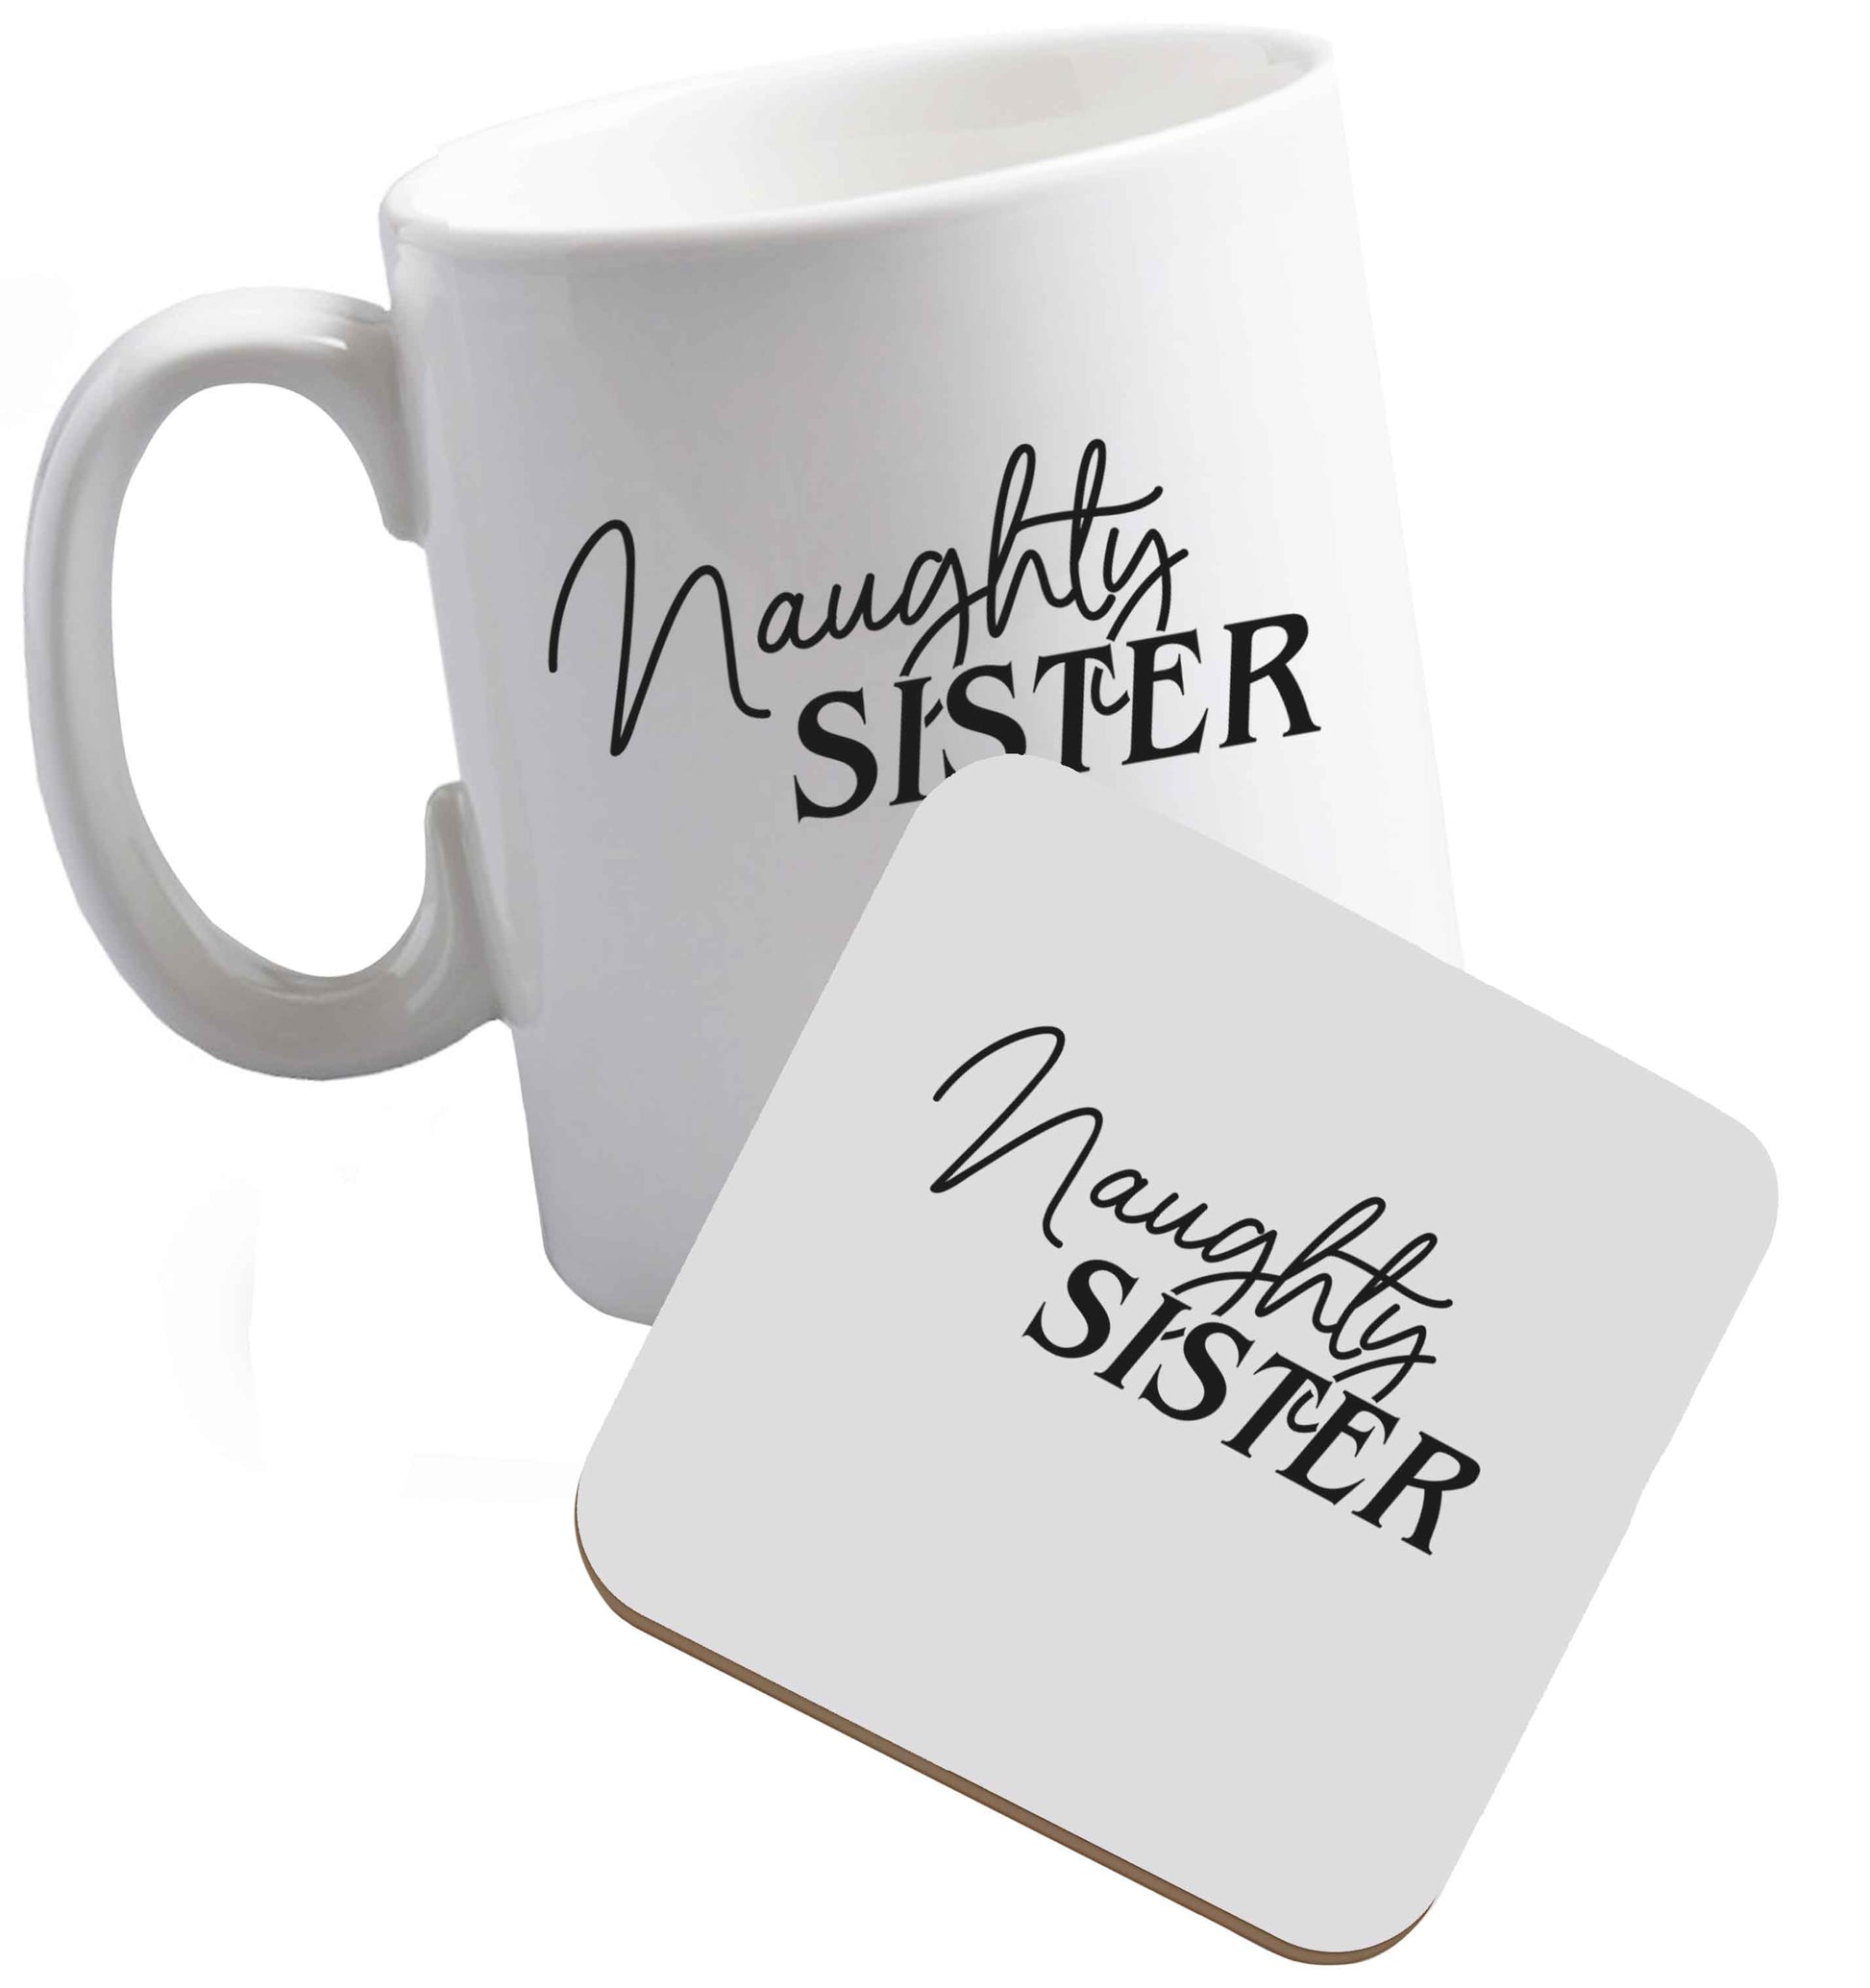 10 oz Naughty Sister ceramic mug and coaster set right handed